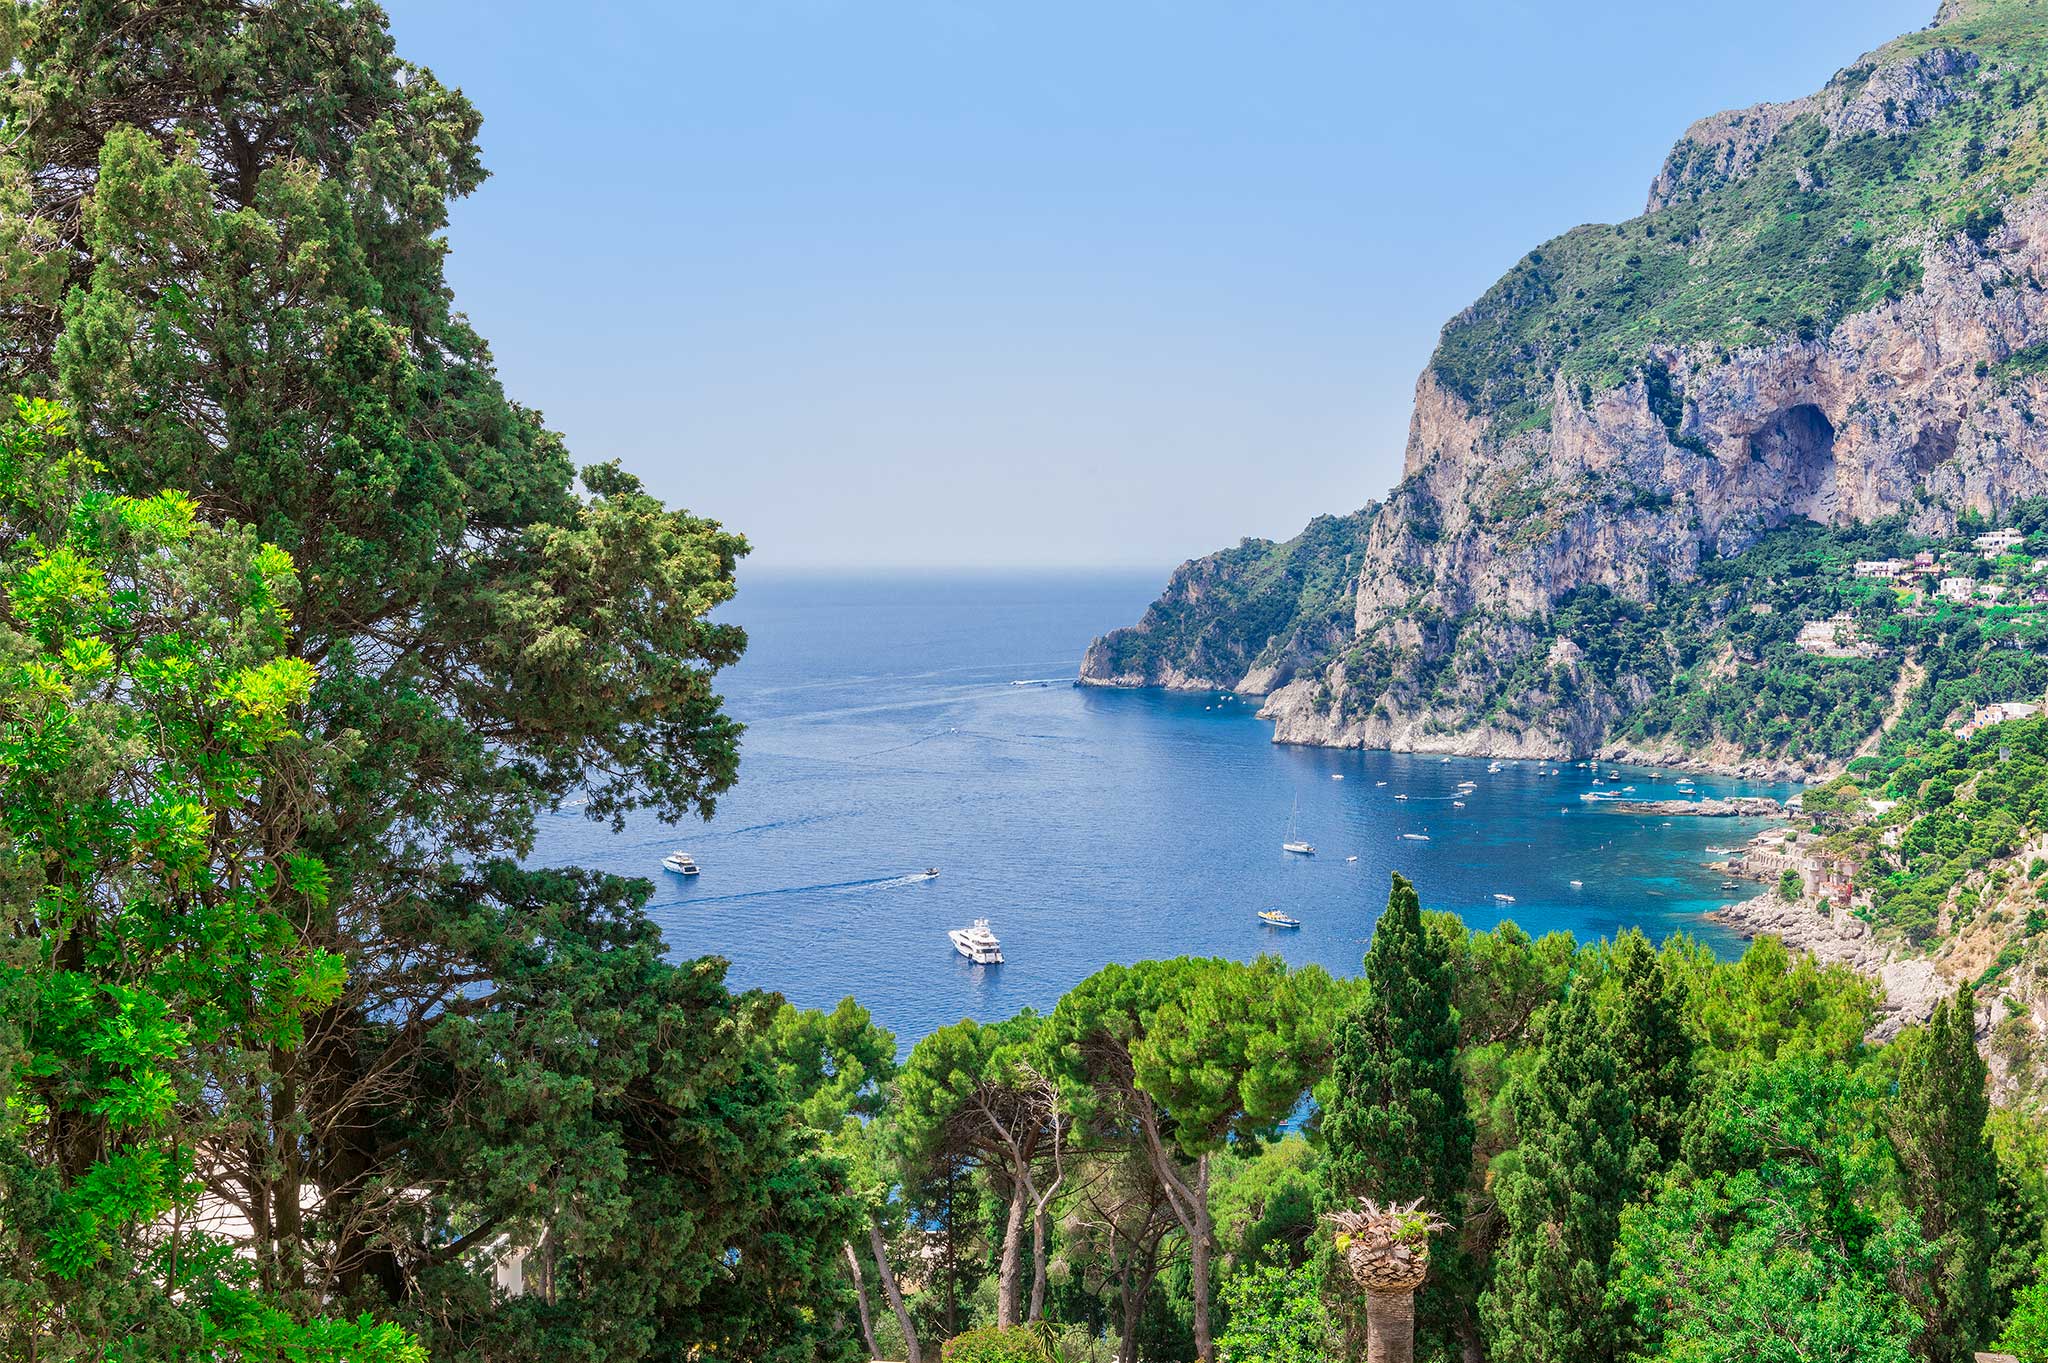 Capri villa for Sale, Capri Italy luxury real estate Sotheby’s Realty - sothebys.photo 1